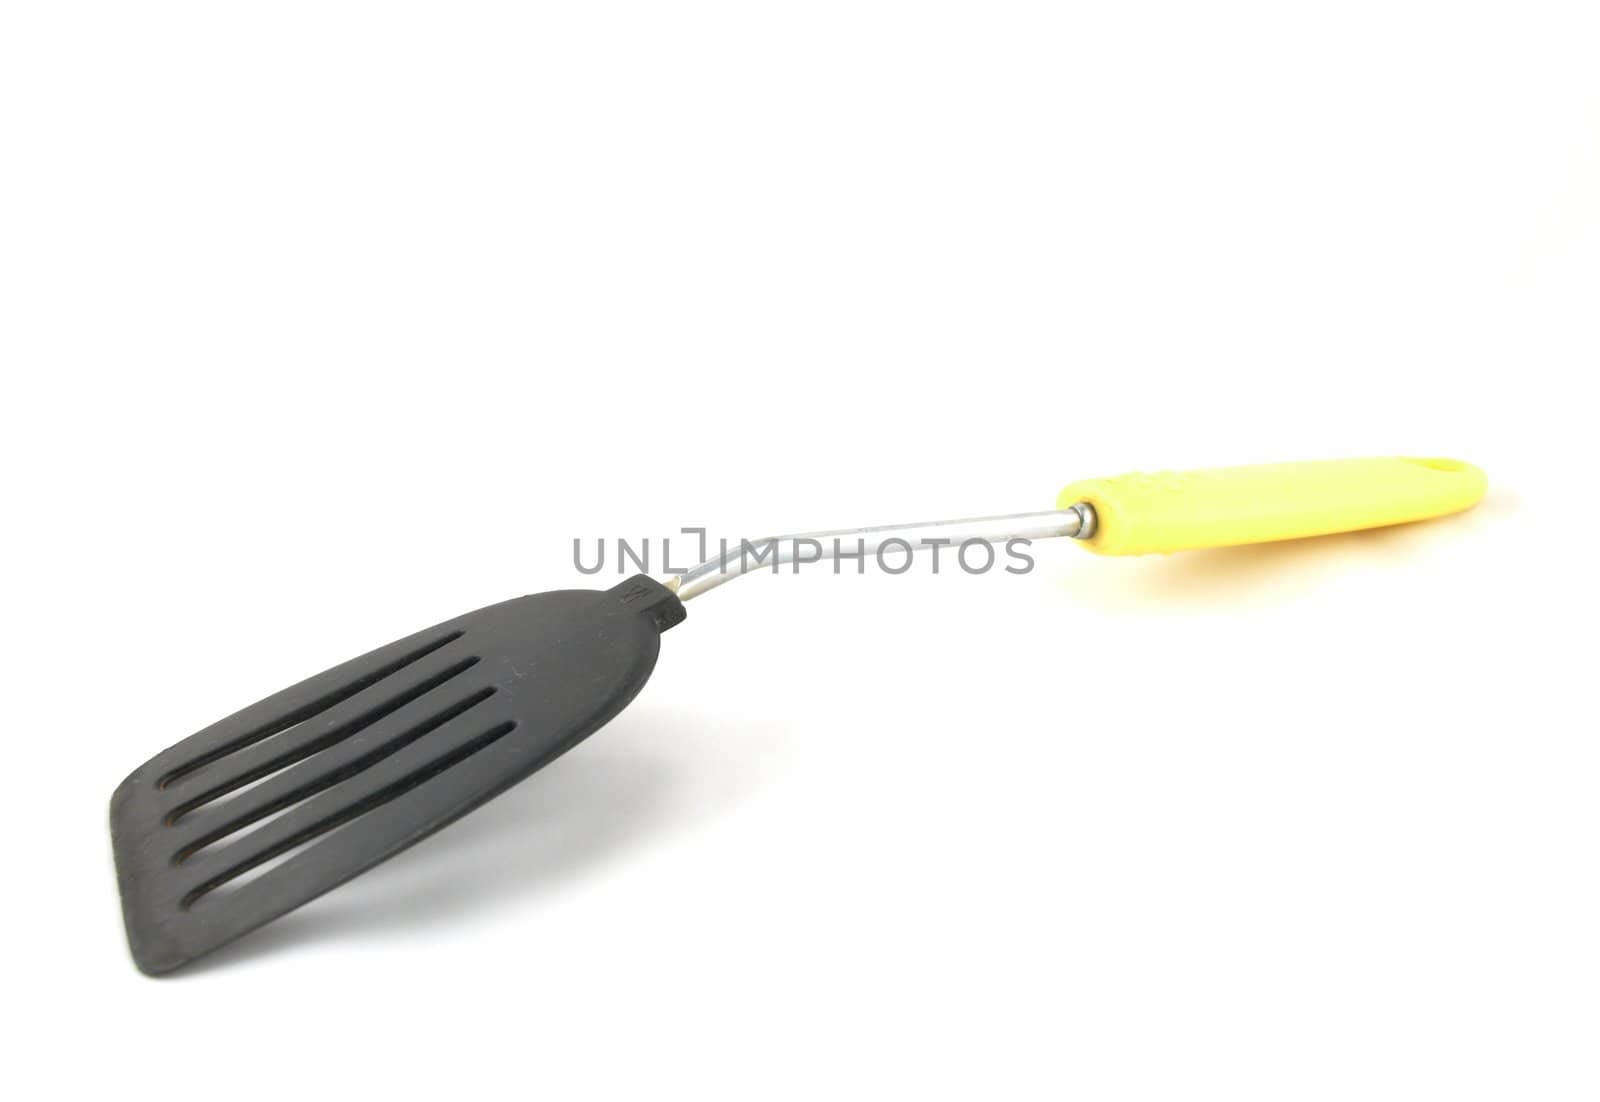 A kitchen spatula on a white background.